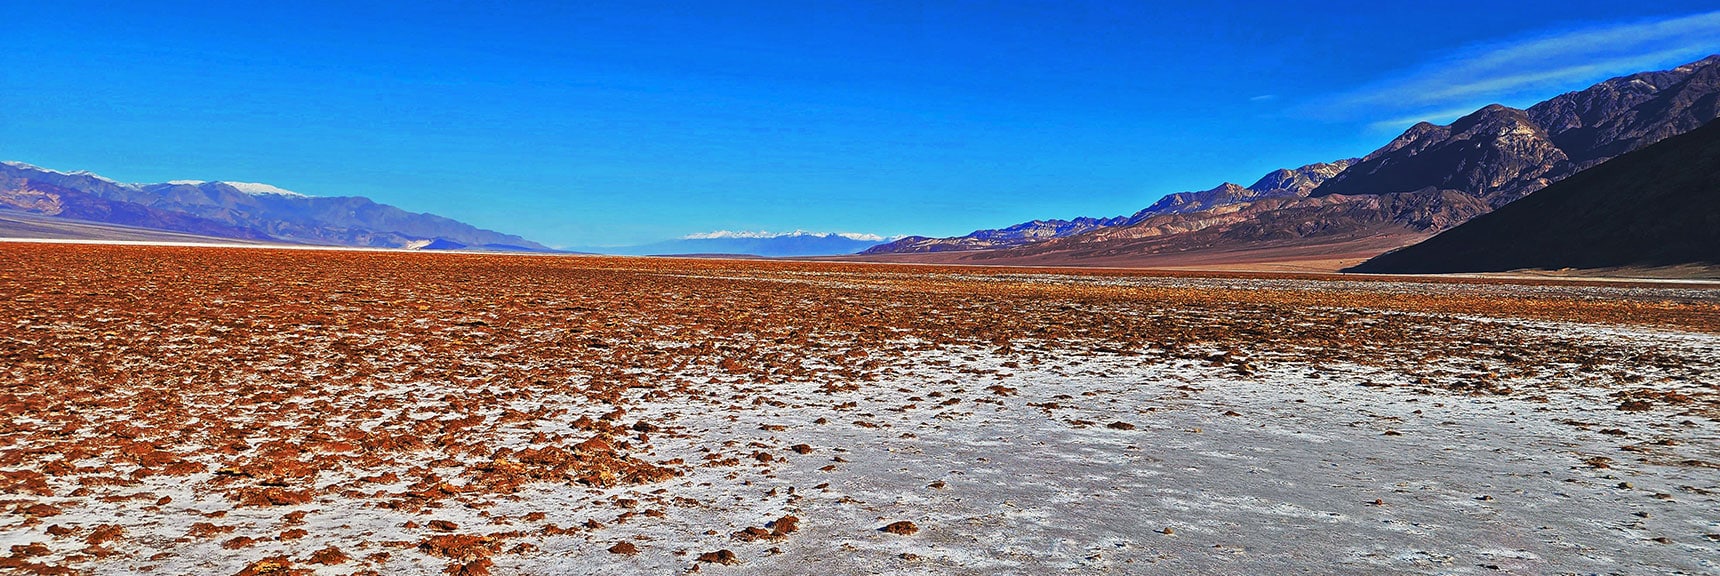 Crossing the First Salt Flat, View North | Death Valley Crossing | Death Valley National Park, California | David Smith | LasVegasAreaTrails.com